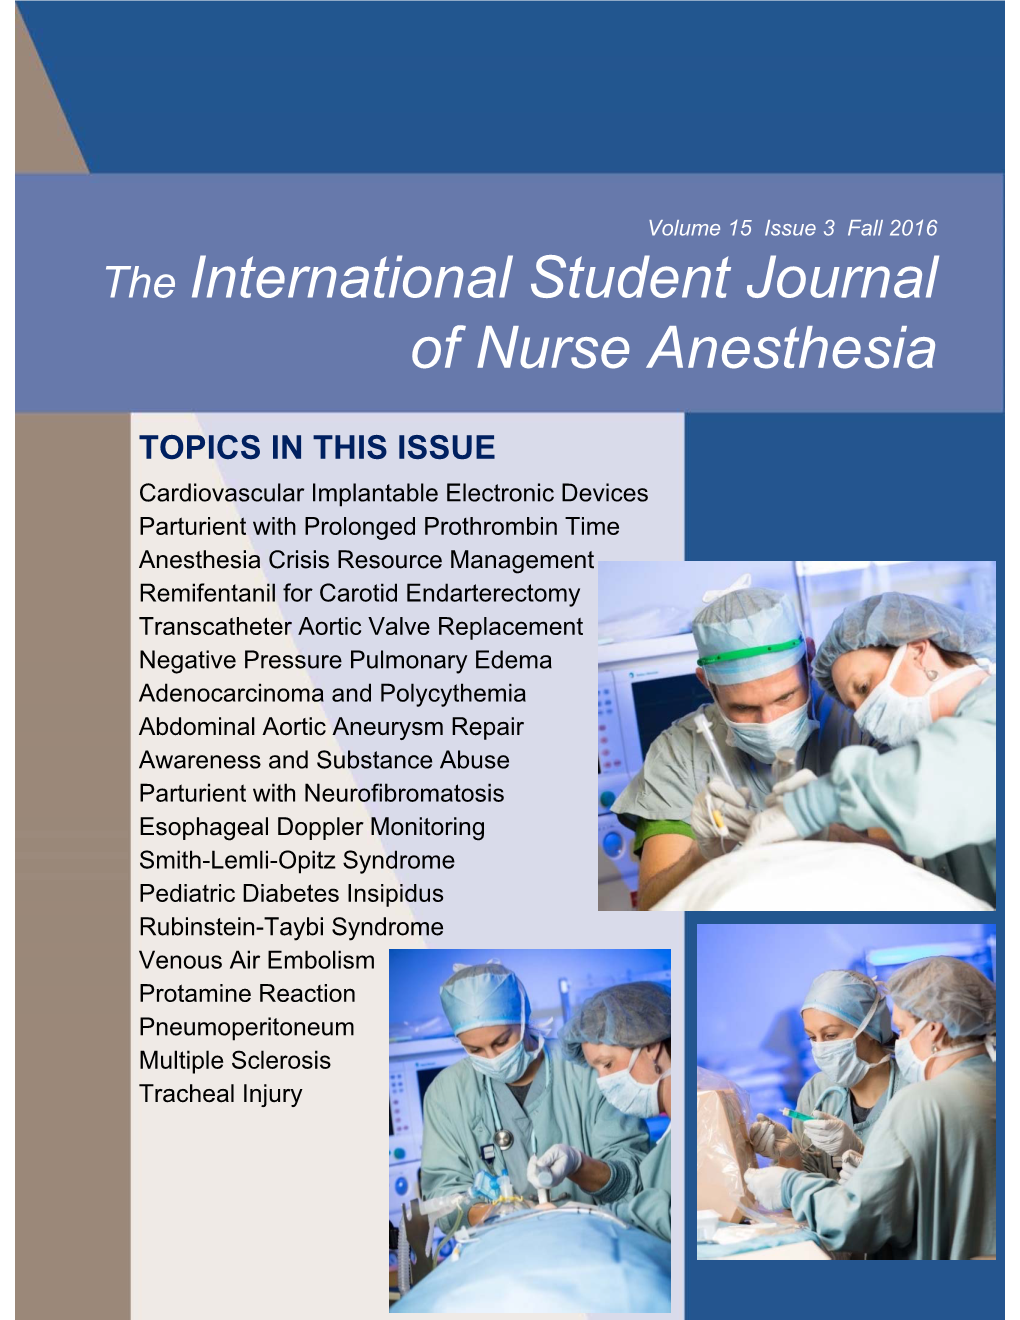 The International Student Journal of Nurse Anesthesia